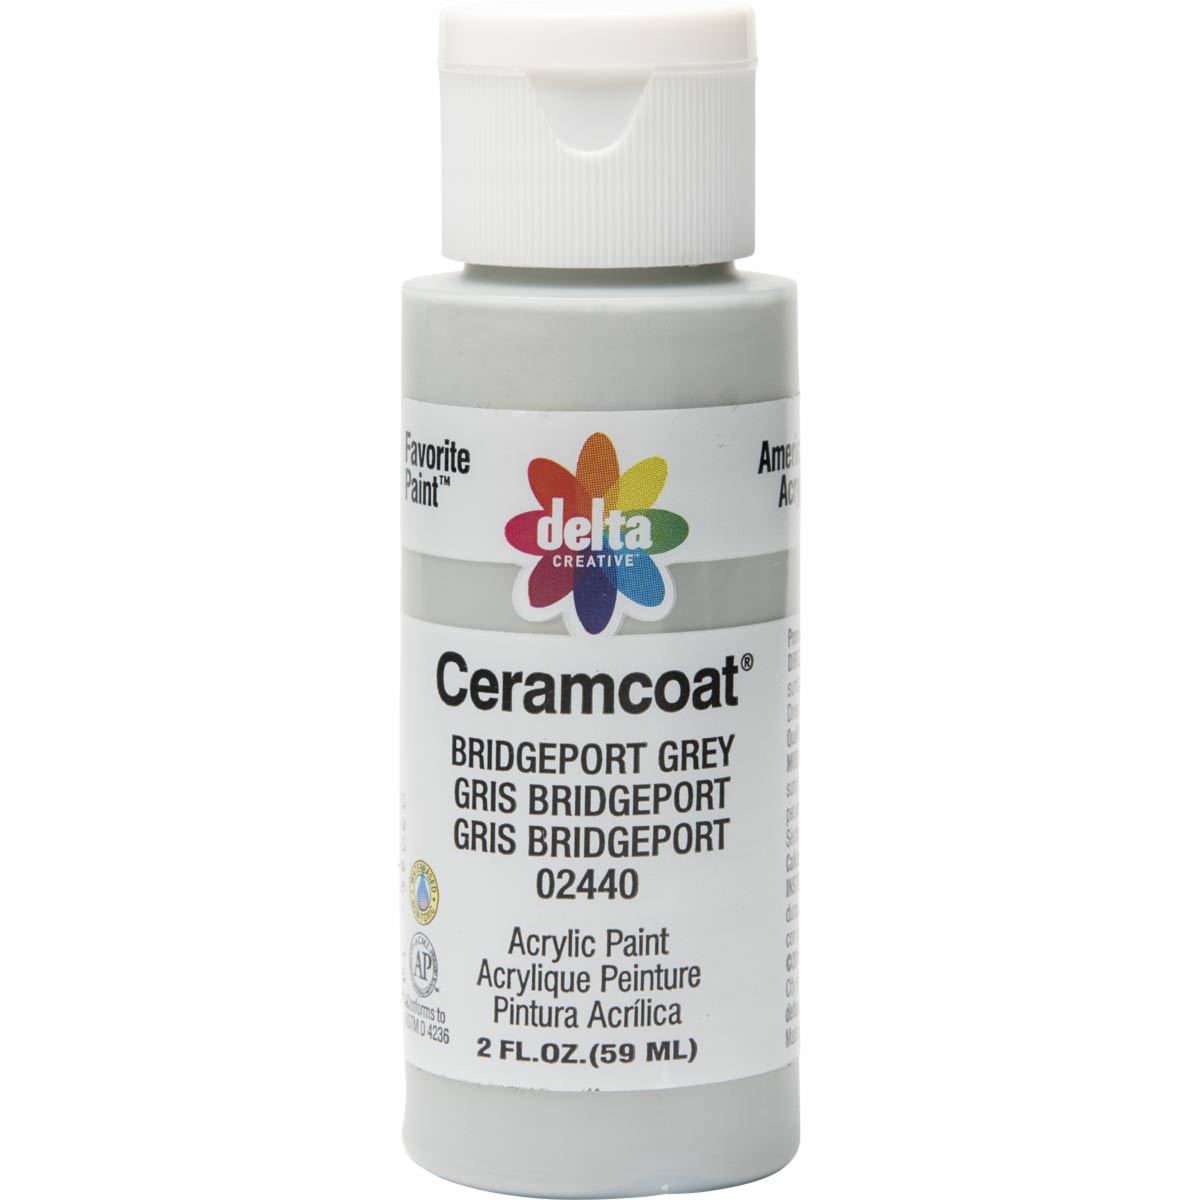 Delta Ceramcoat Acrylic Paint - Bridgeport Grey, 2 oz. - 024400202W